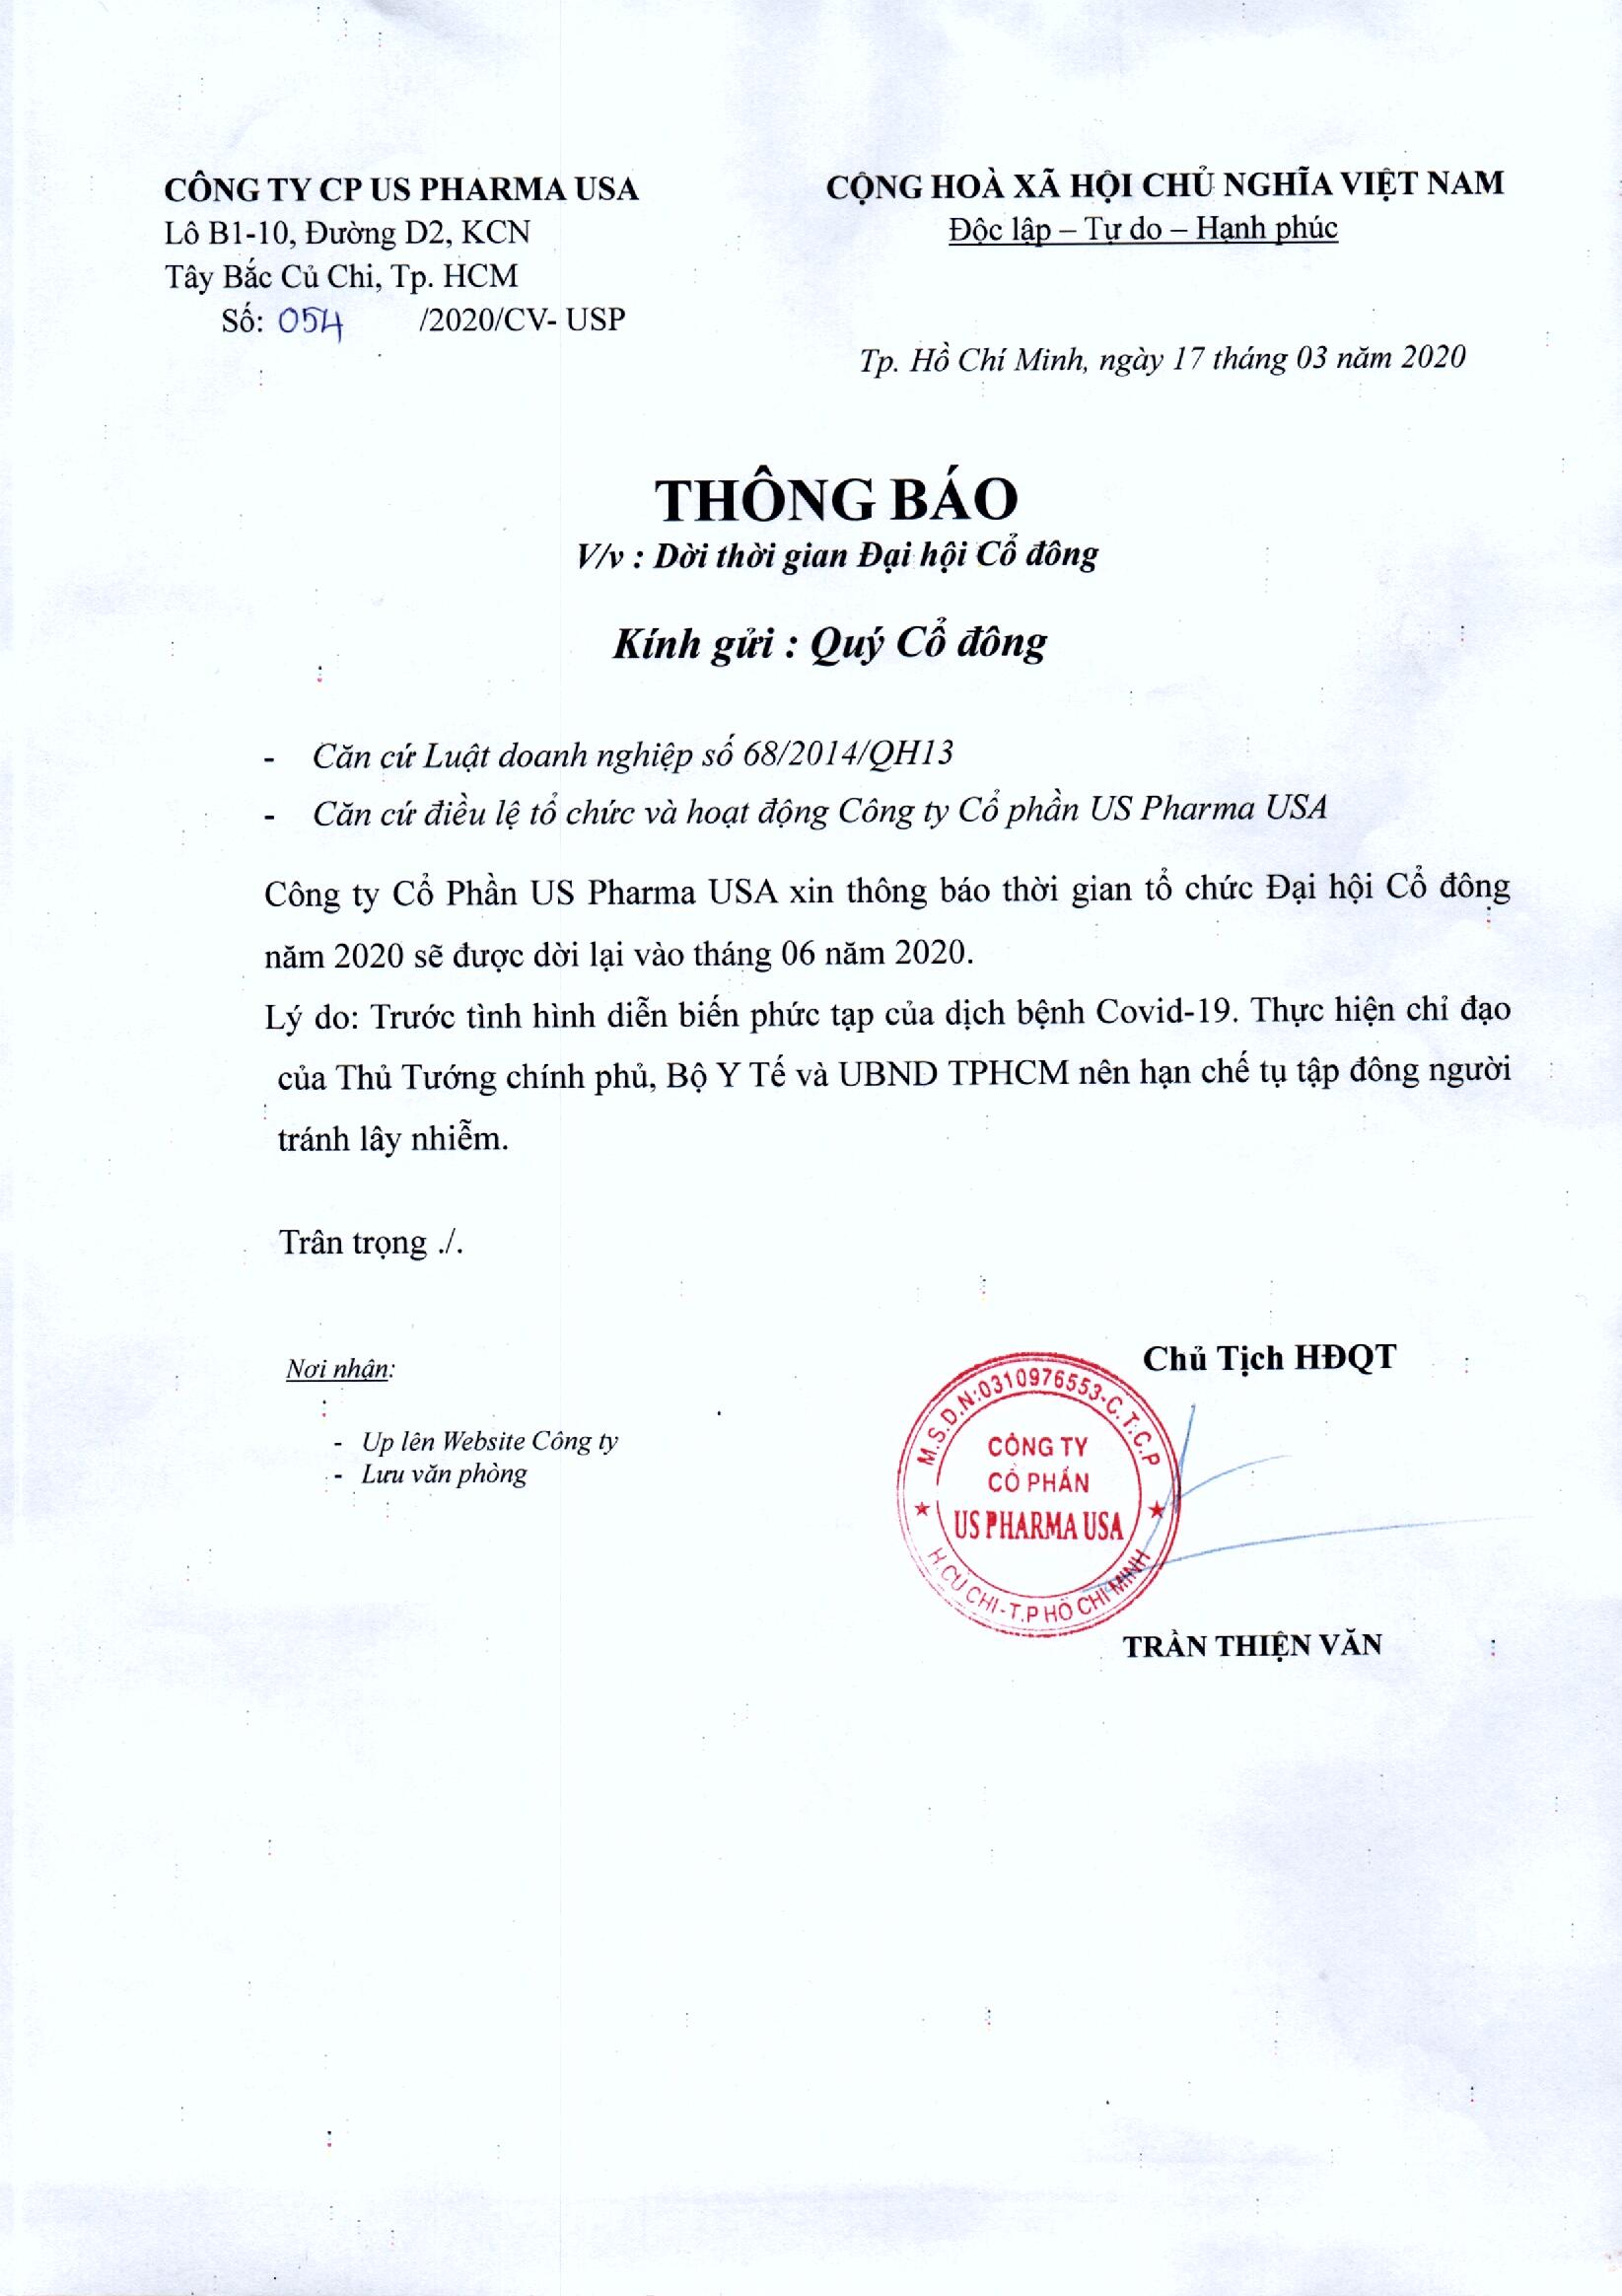 Thong Bao.jpg